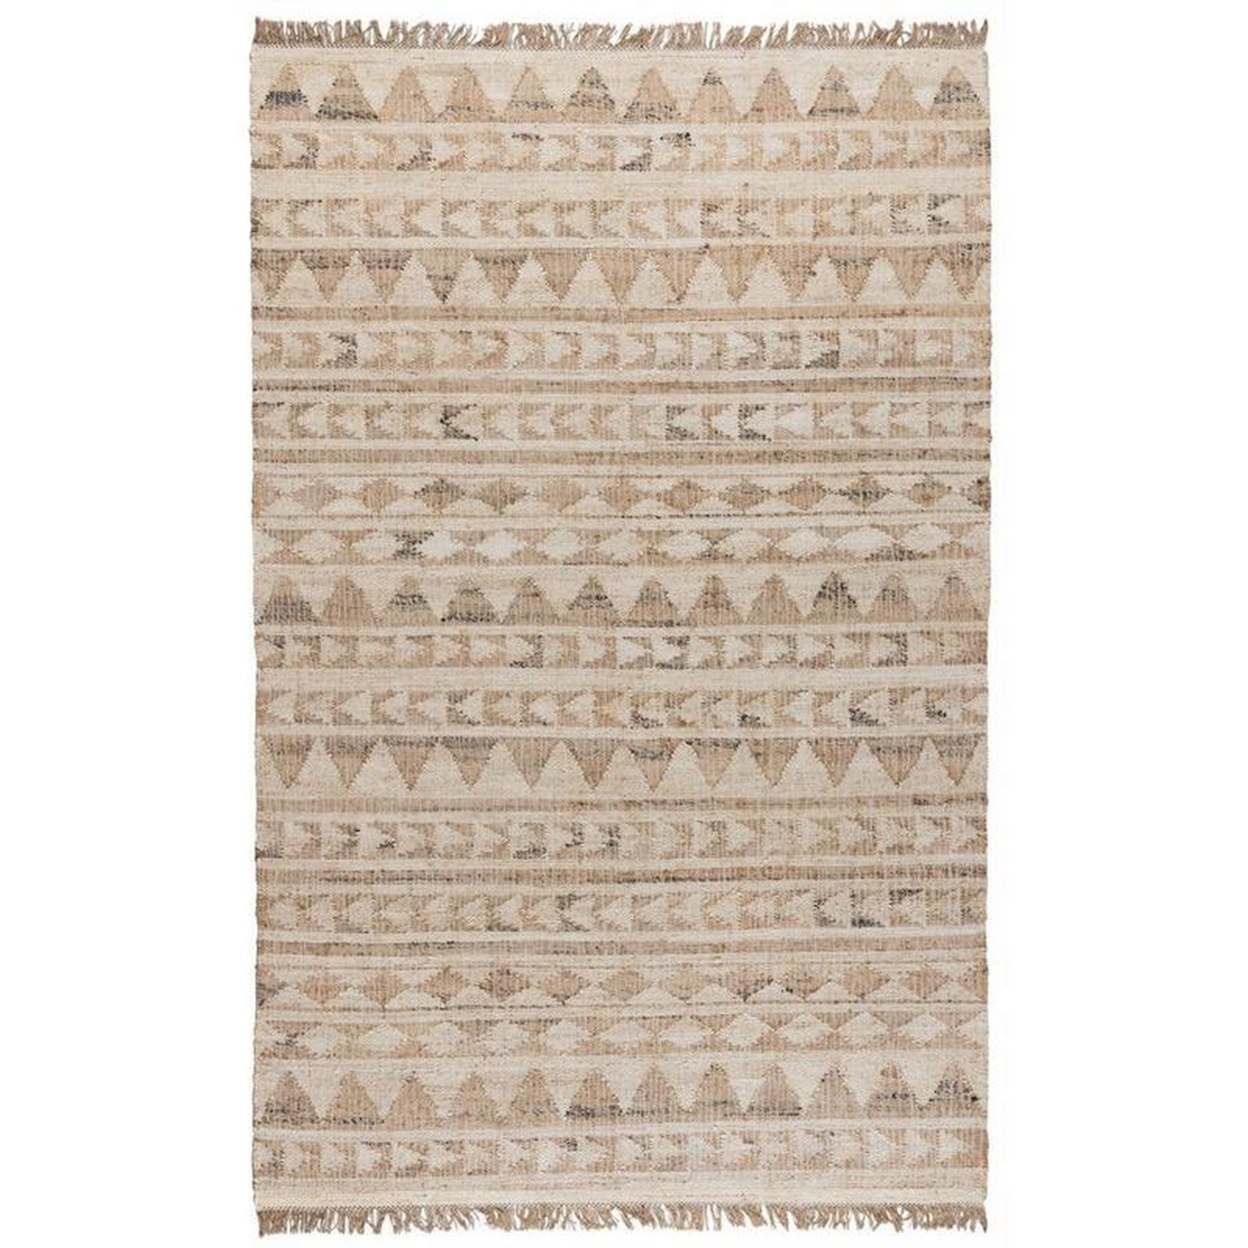 Moly 5 X 8 Tassel Area Rug, Tribal Triangle Pattern, Brown Handwoven Jute - Saltoro Sherpi